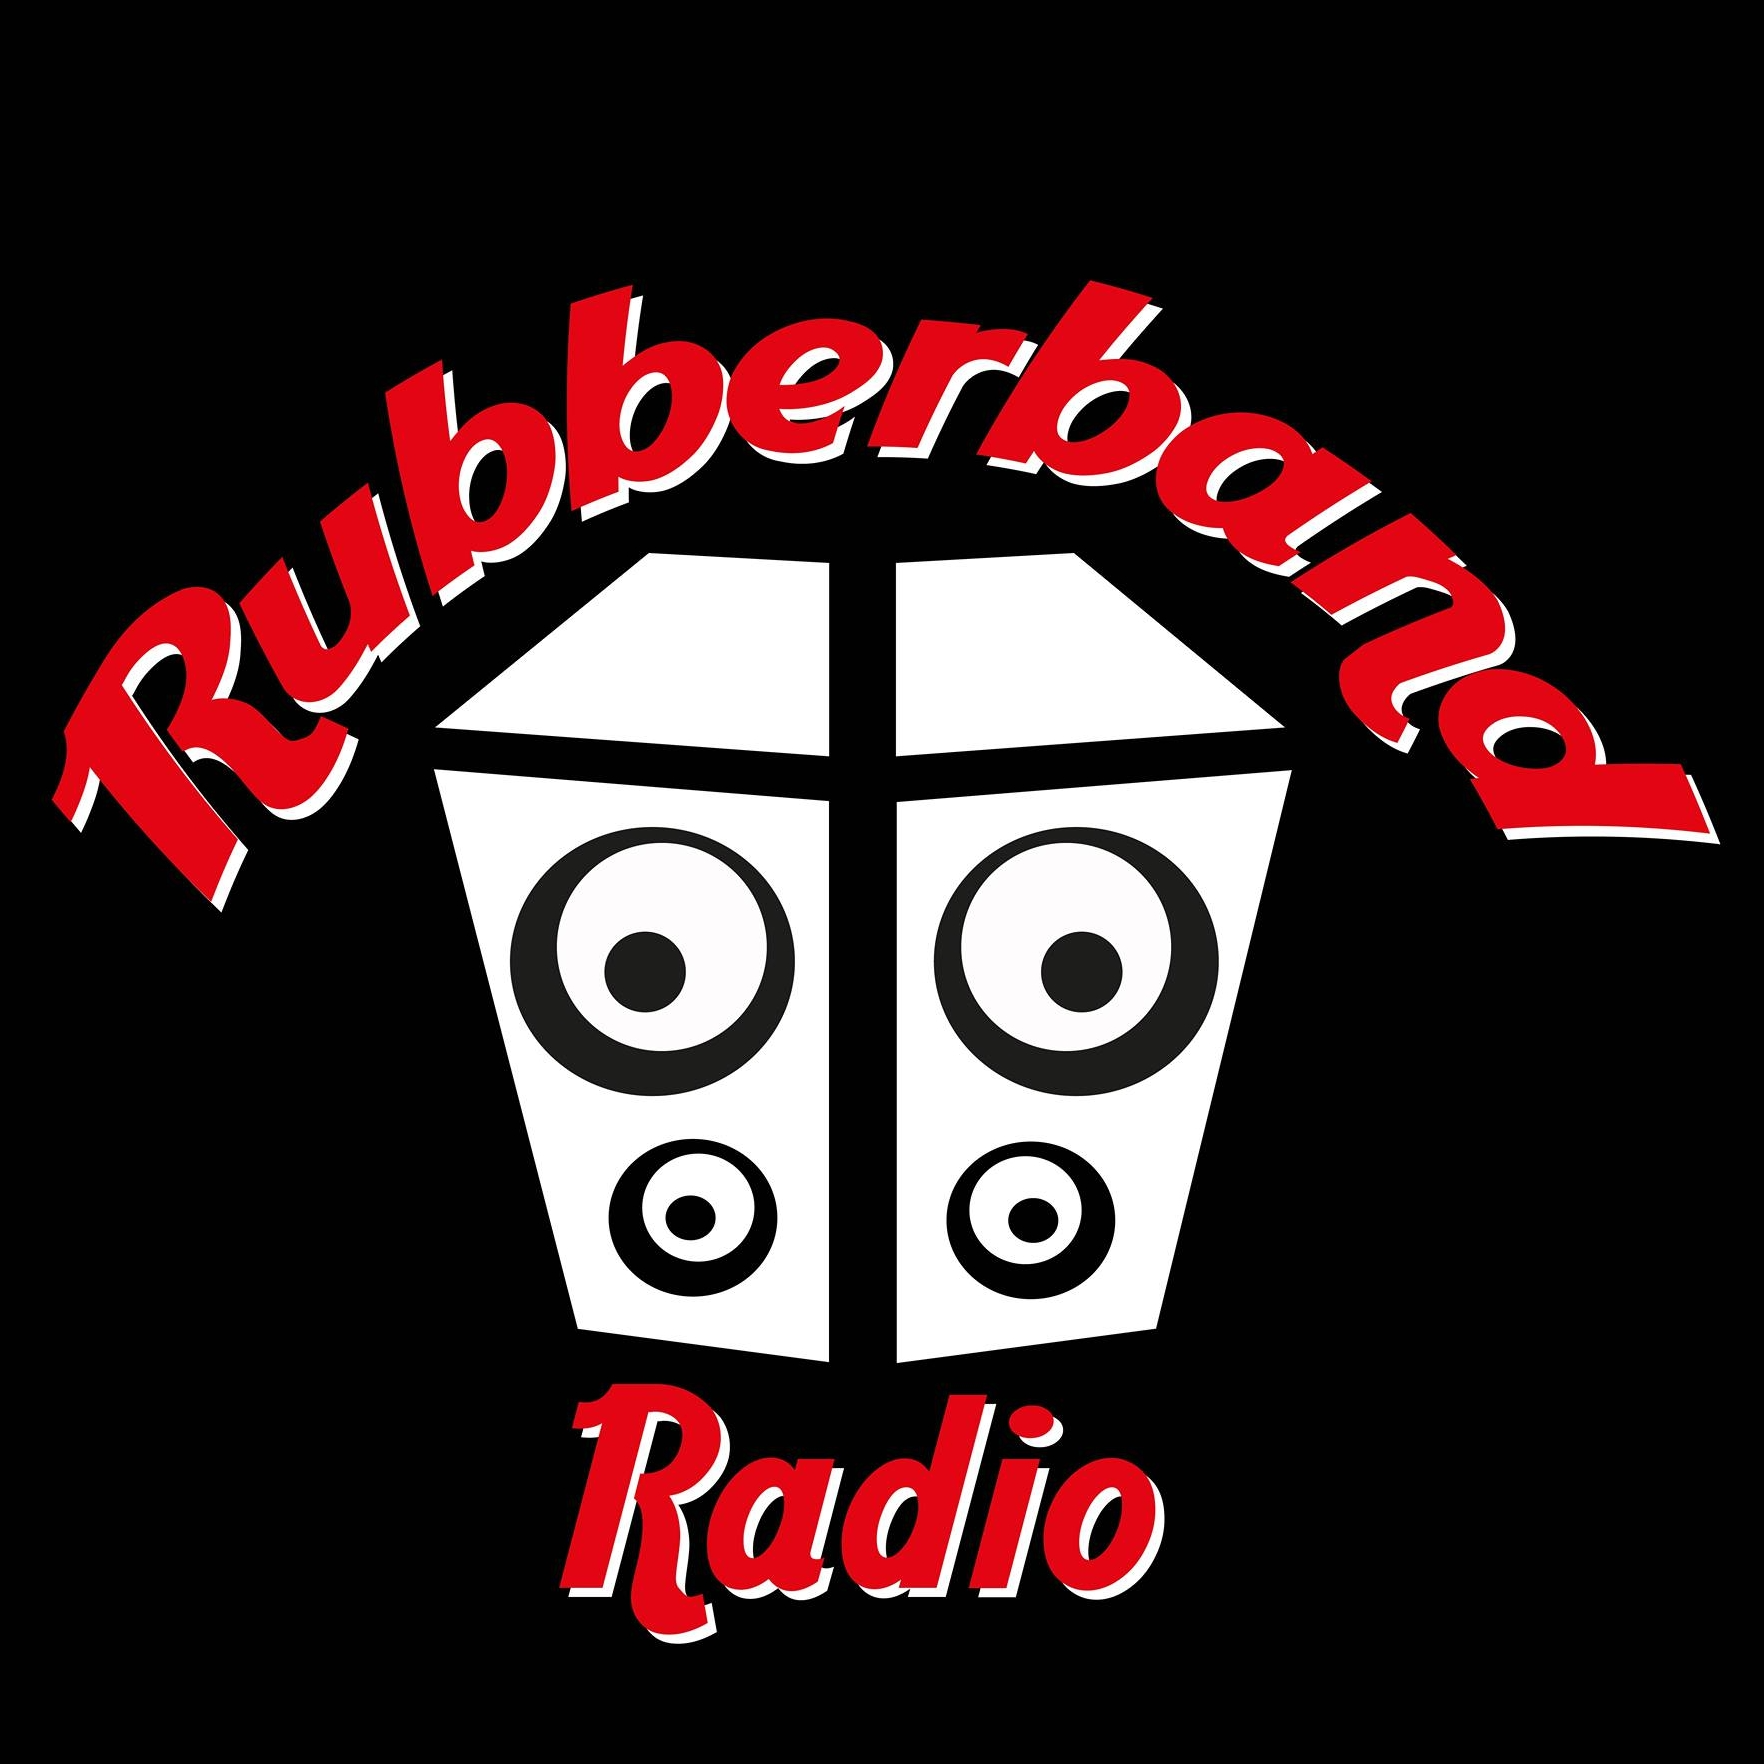 Rubberband Radio